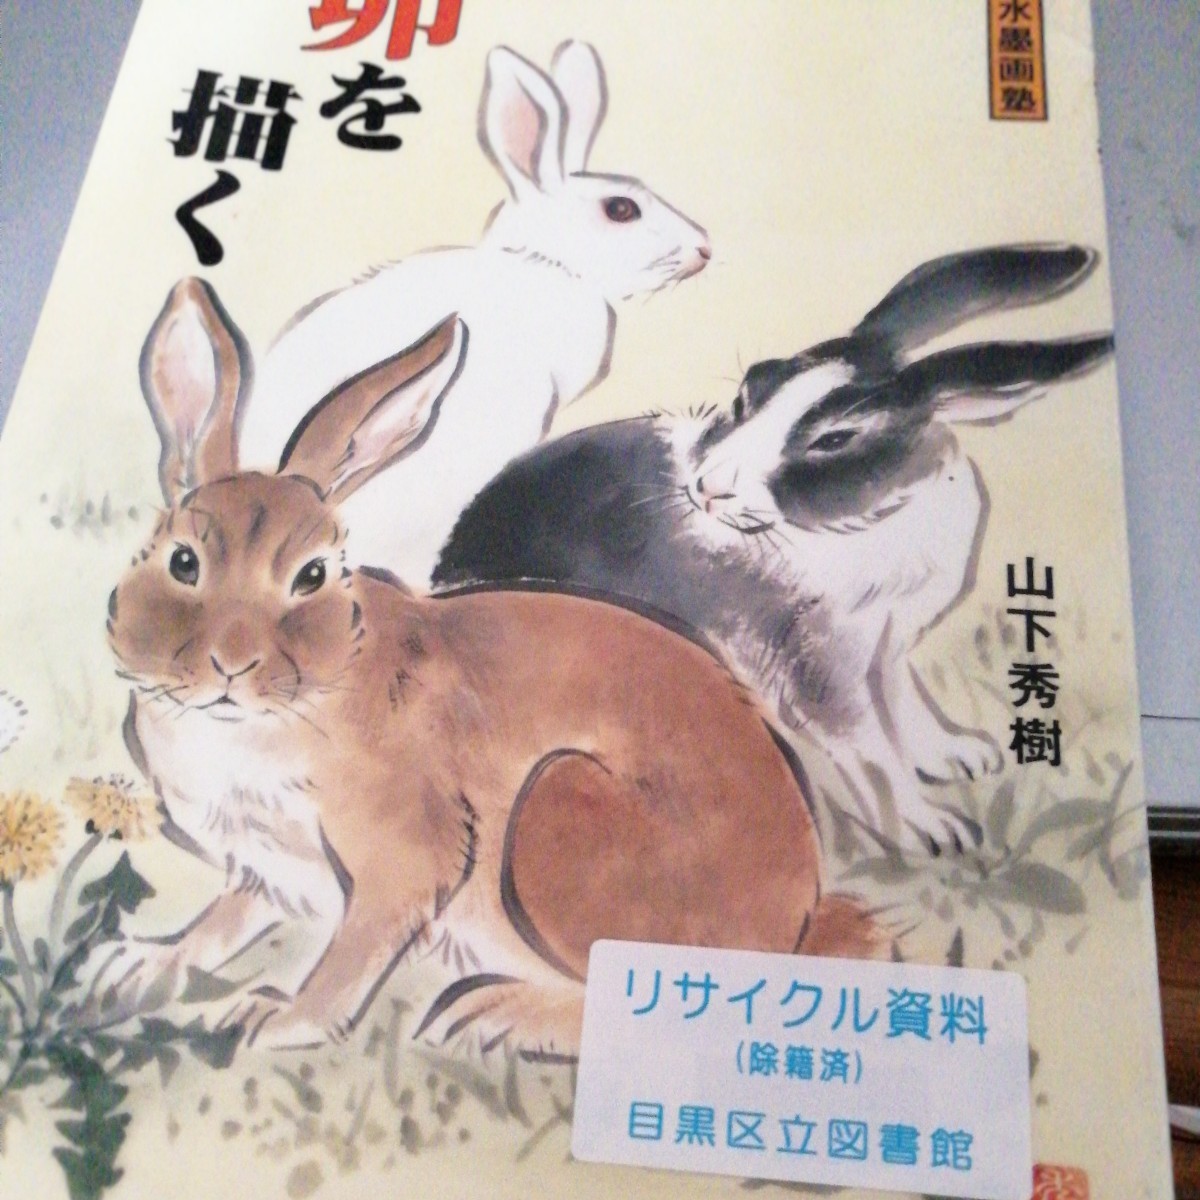 Drawing a Rabbit: Ink Painting School/Hideki Yamashita (Author), art, Entertainment, Painting, Technique book